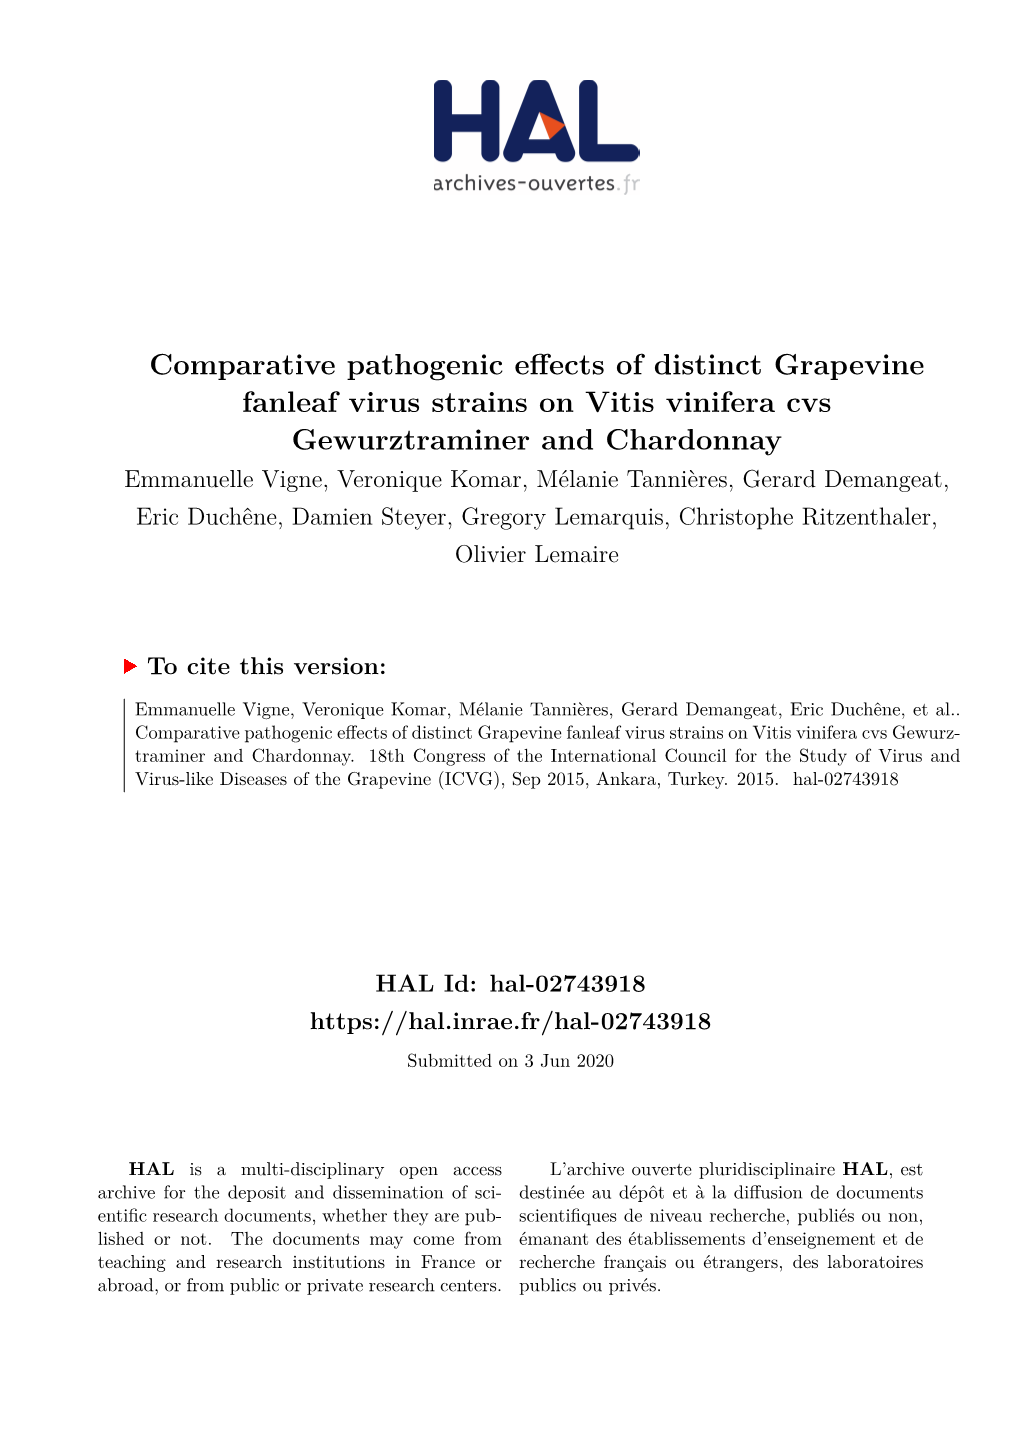 Comparative Pathogenic Effects of Distinct Grapevine Fanleaf Virus